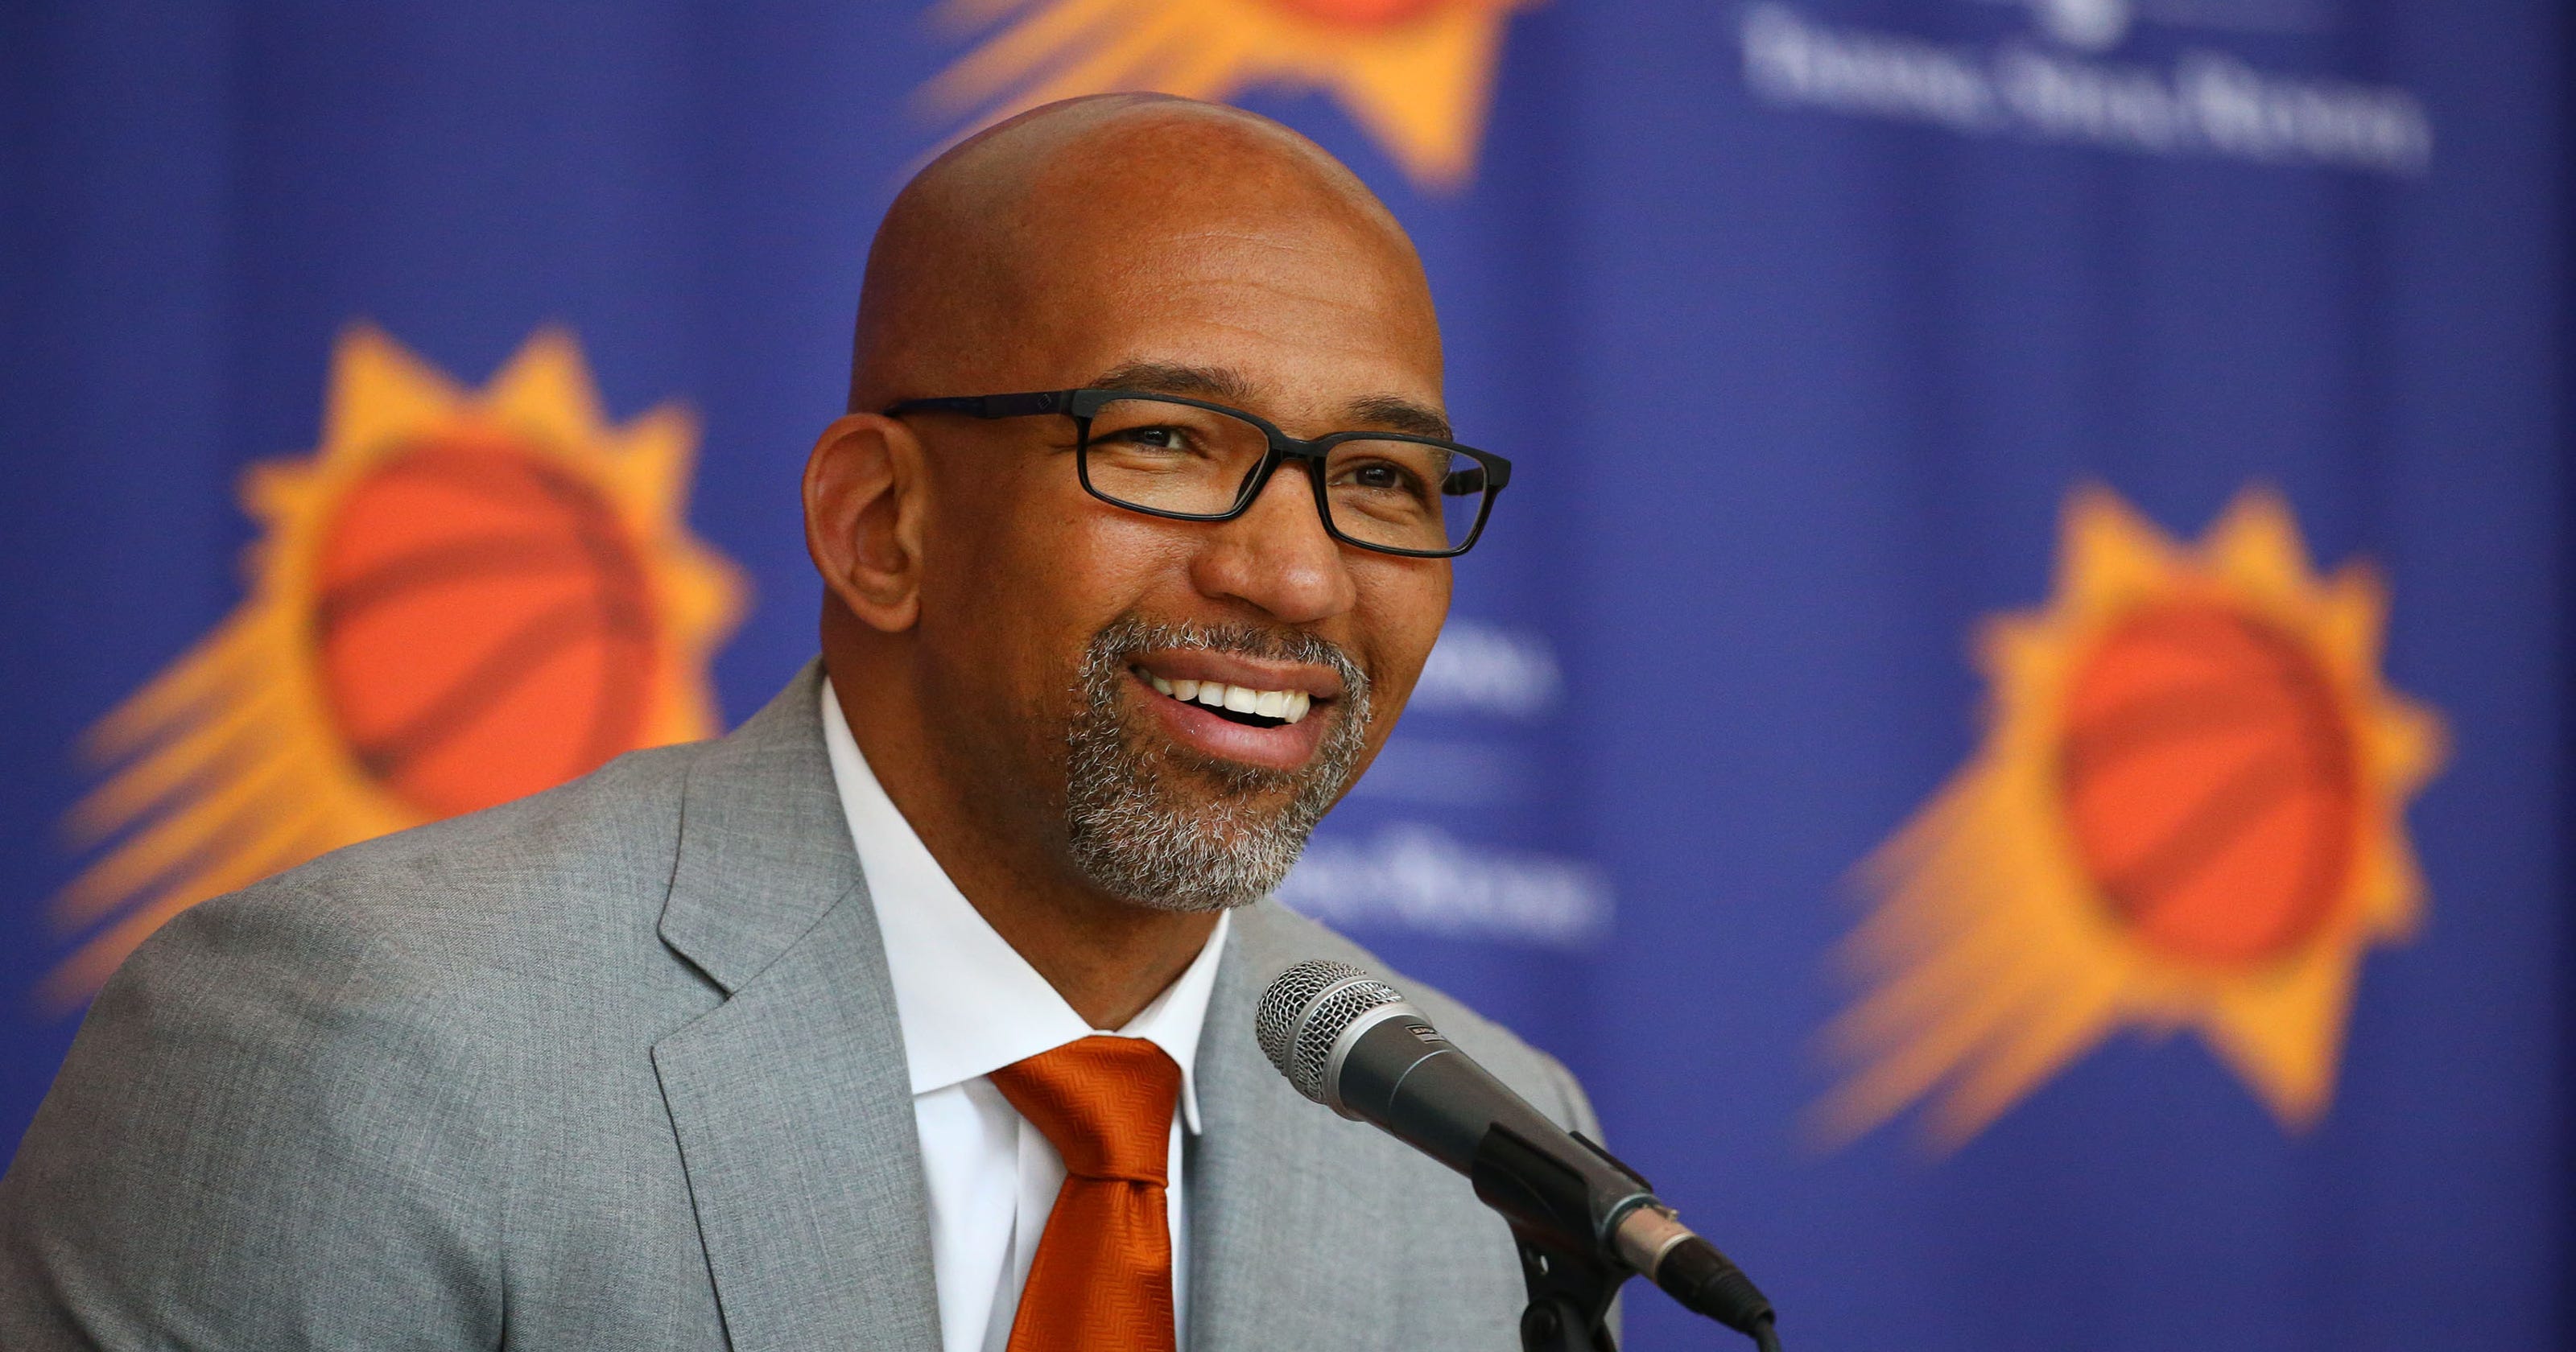 New Phoenix Suns head coach Monty Williams names coaching staff